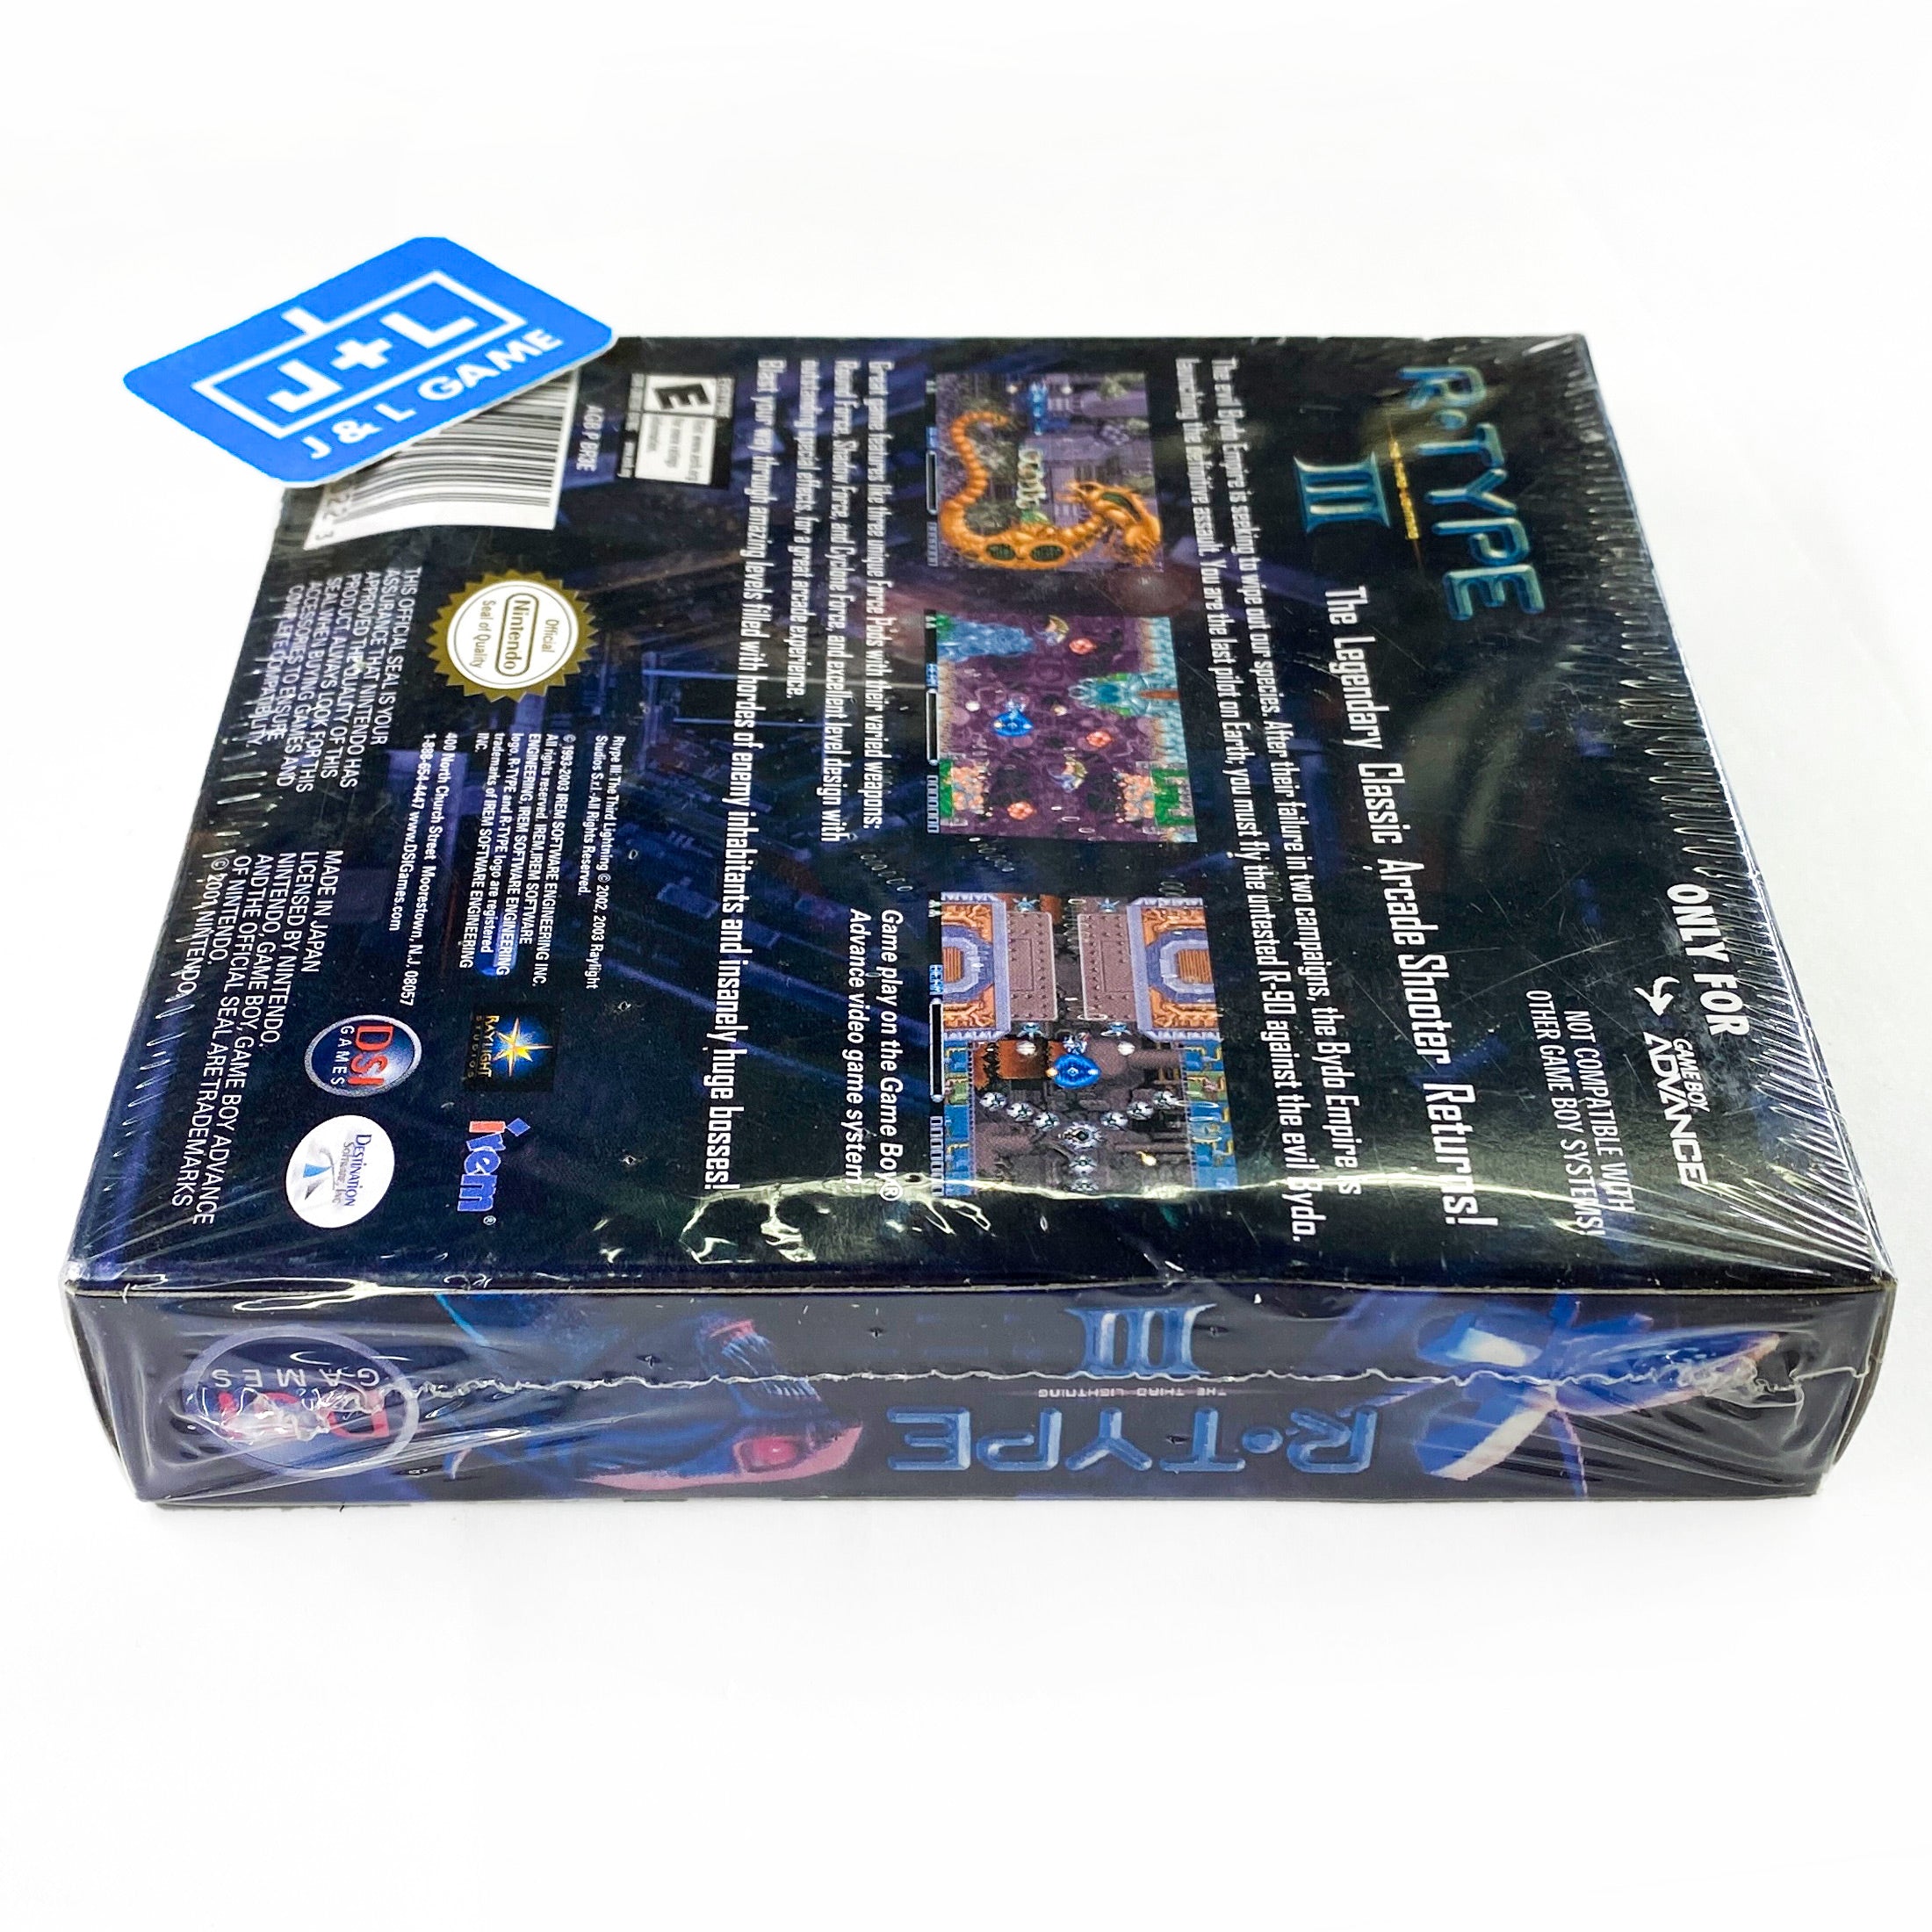 R-Type III: The Third Lightning - (GBA) Game Boy Advance Video Games Destination Software   